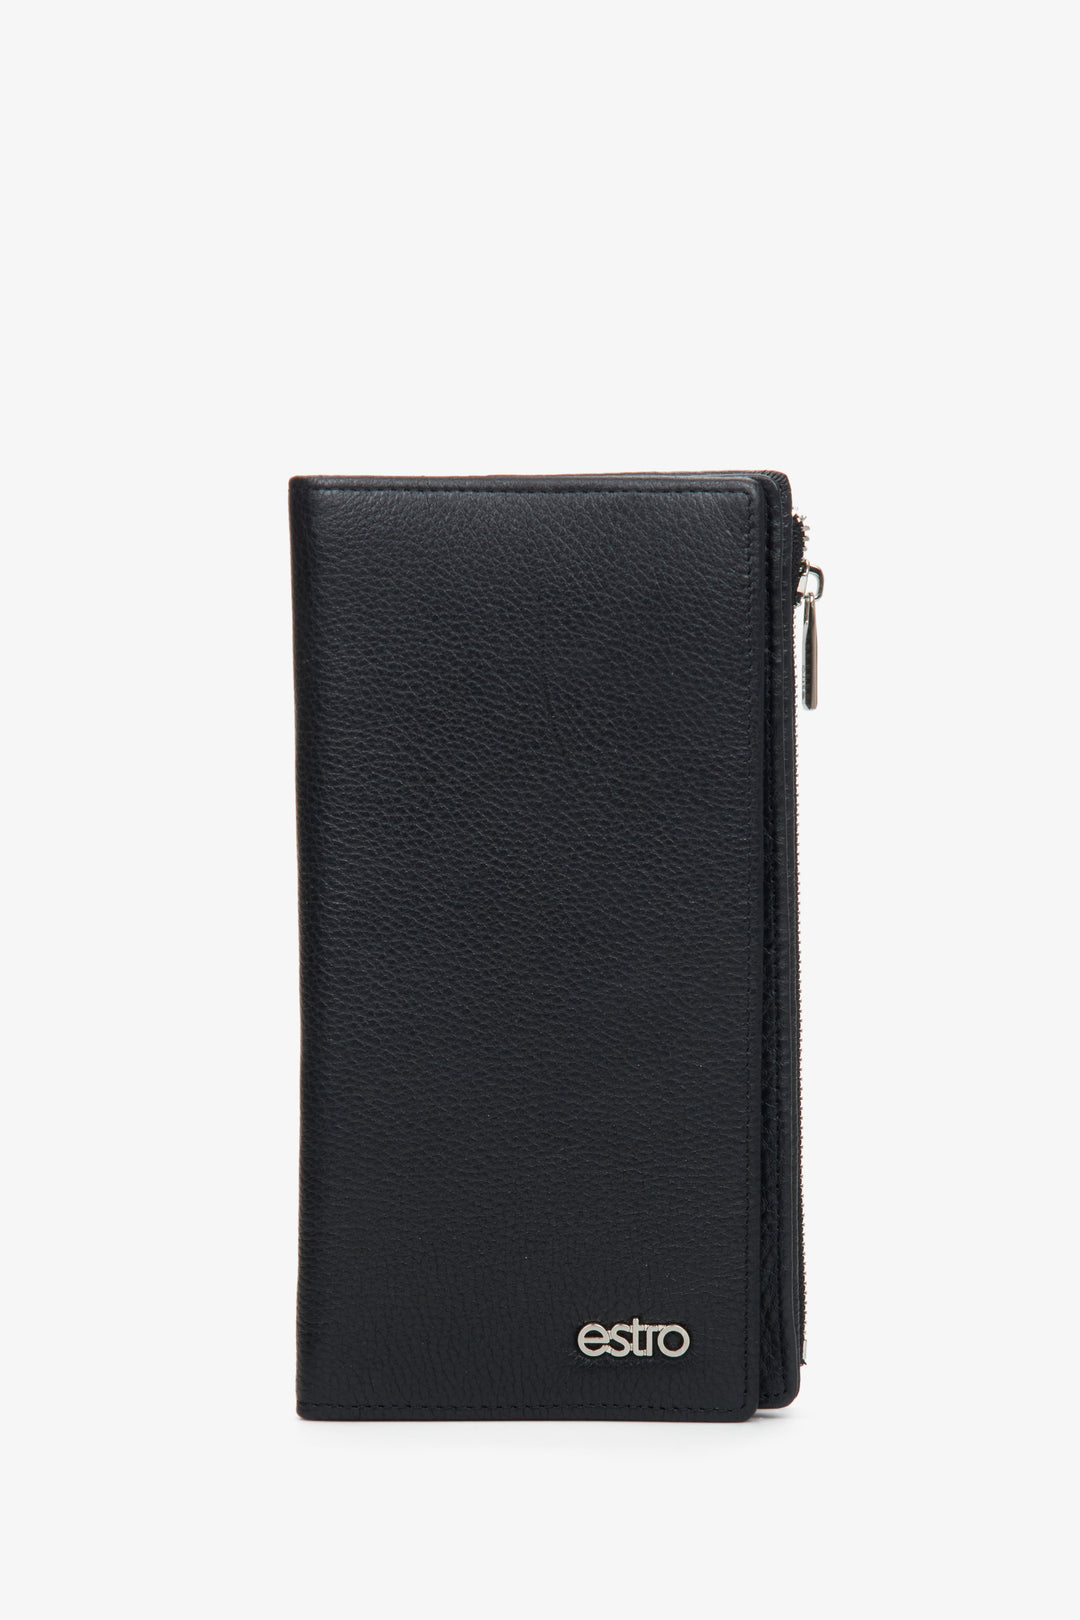 Estro men's black wallet made of genuine leather.